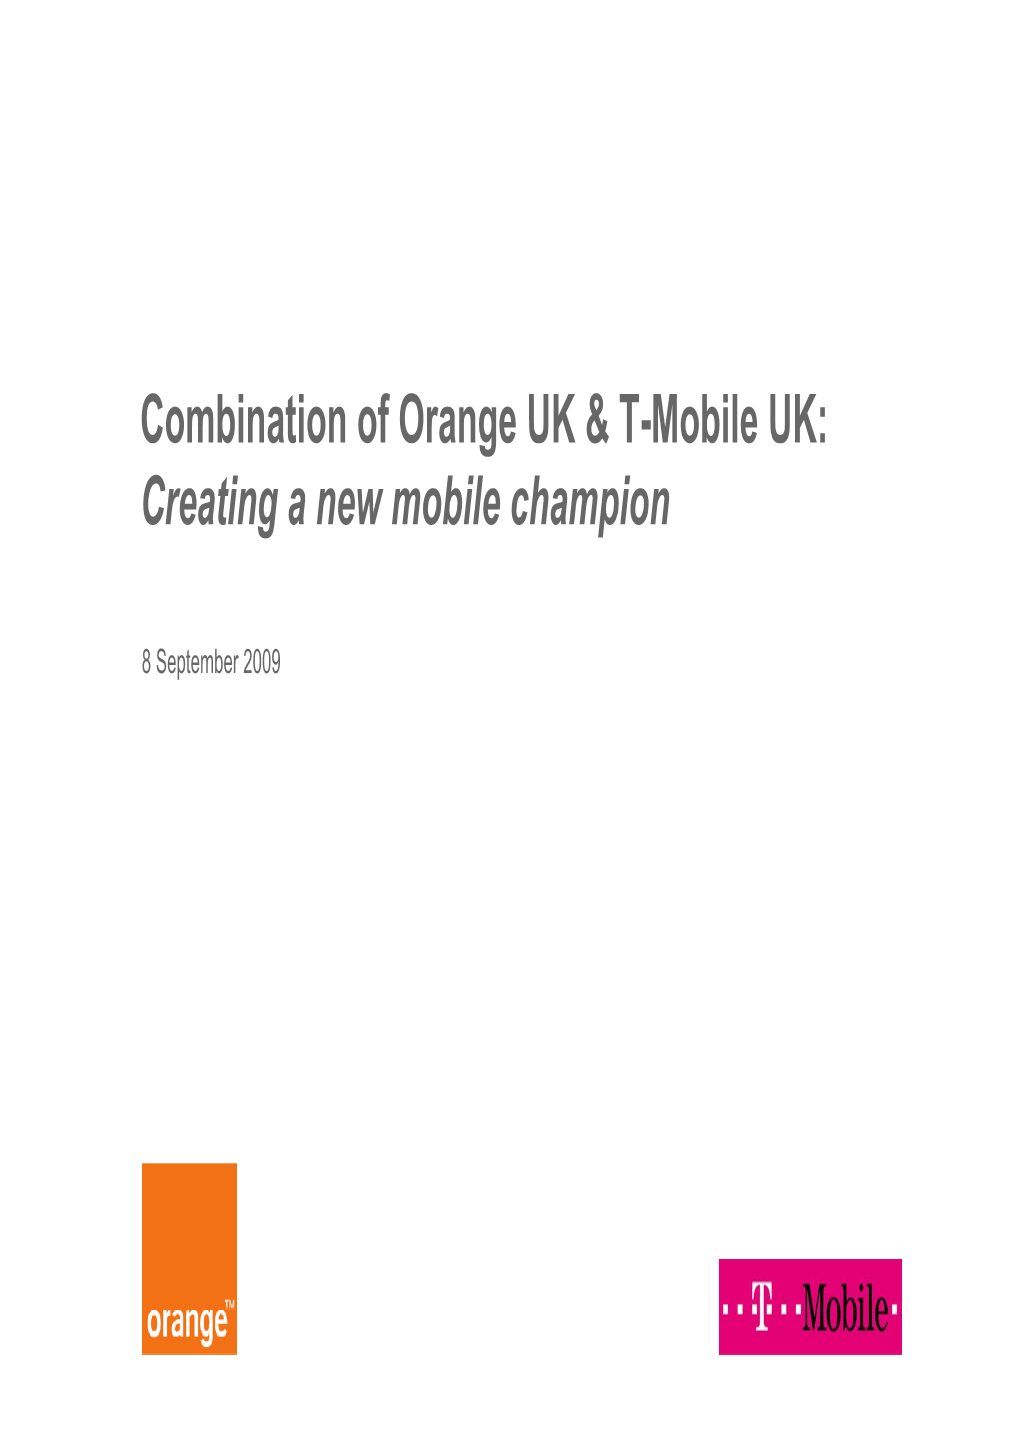 Combination of Orange UK & T-Mobile UK: Creating a New